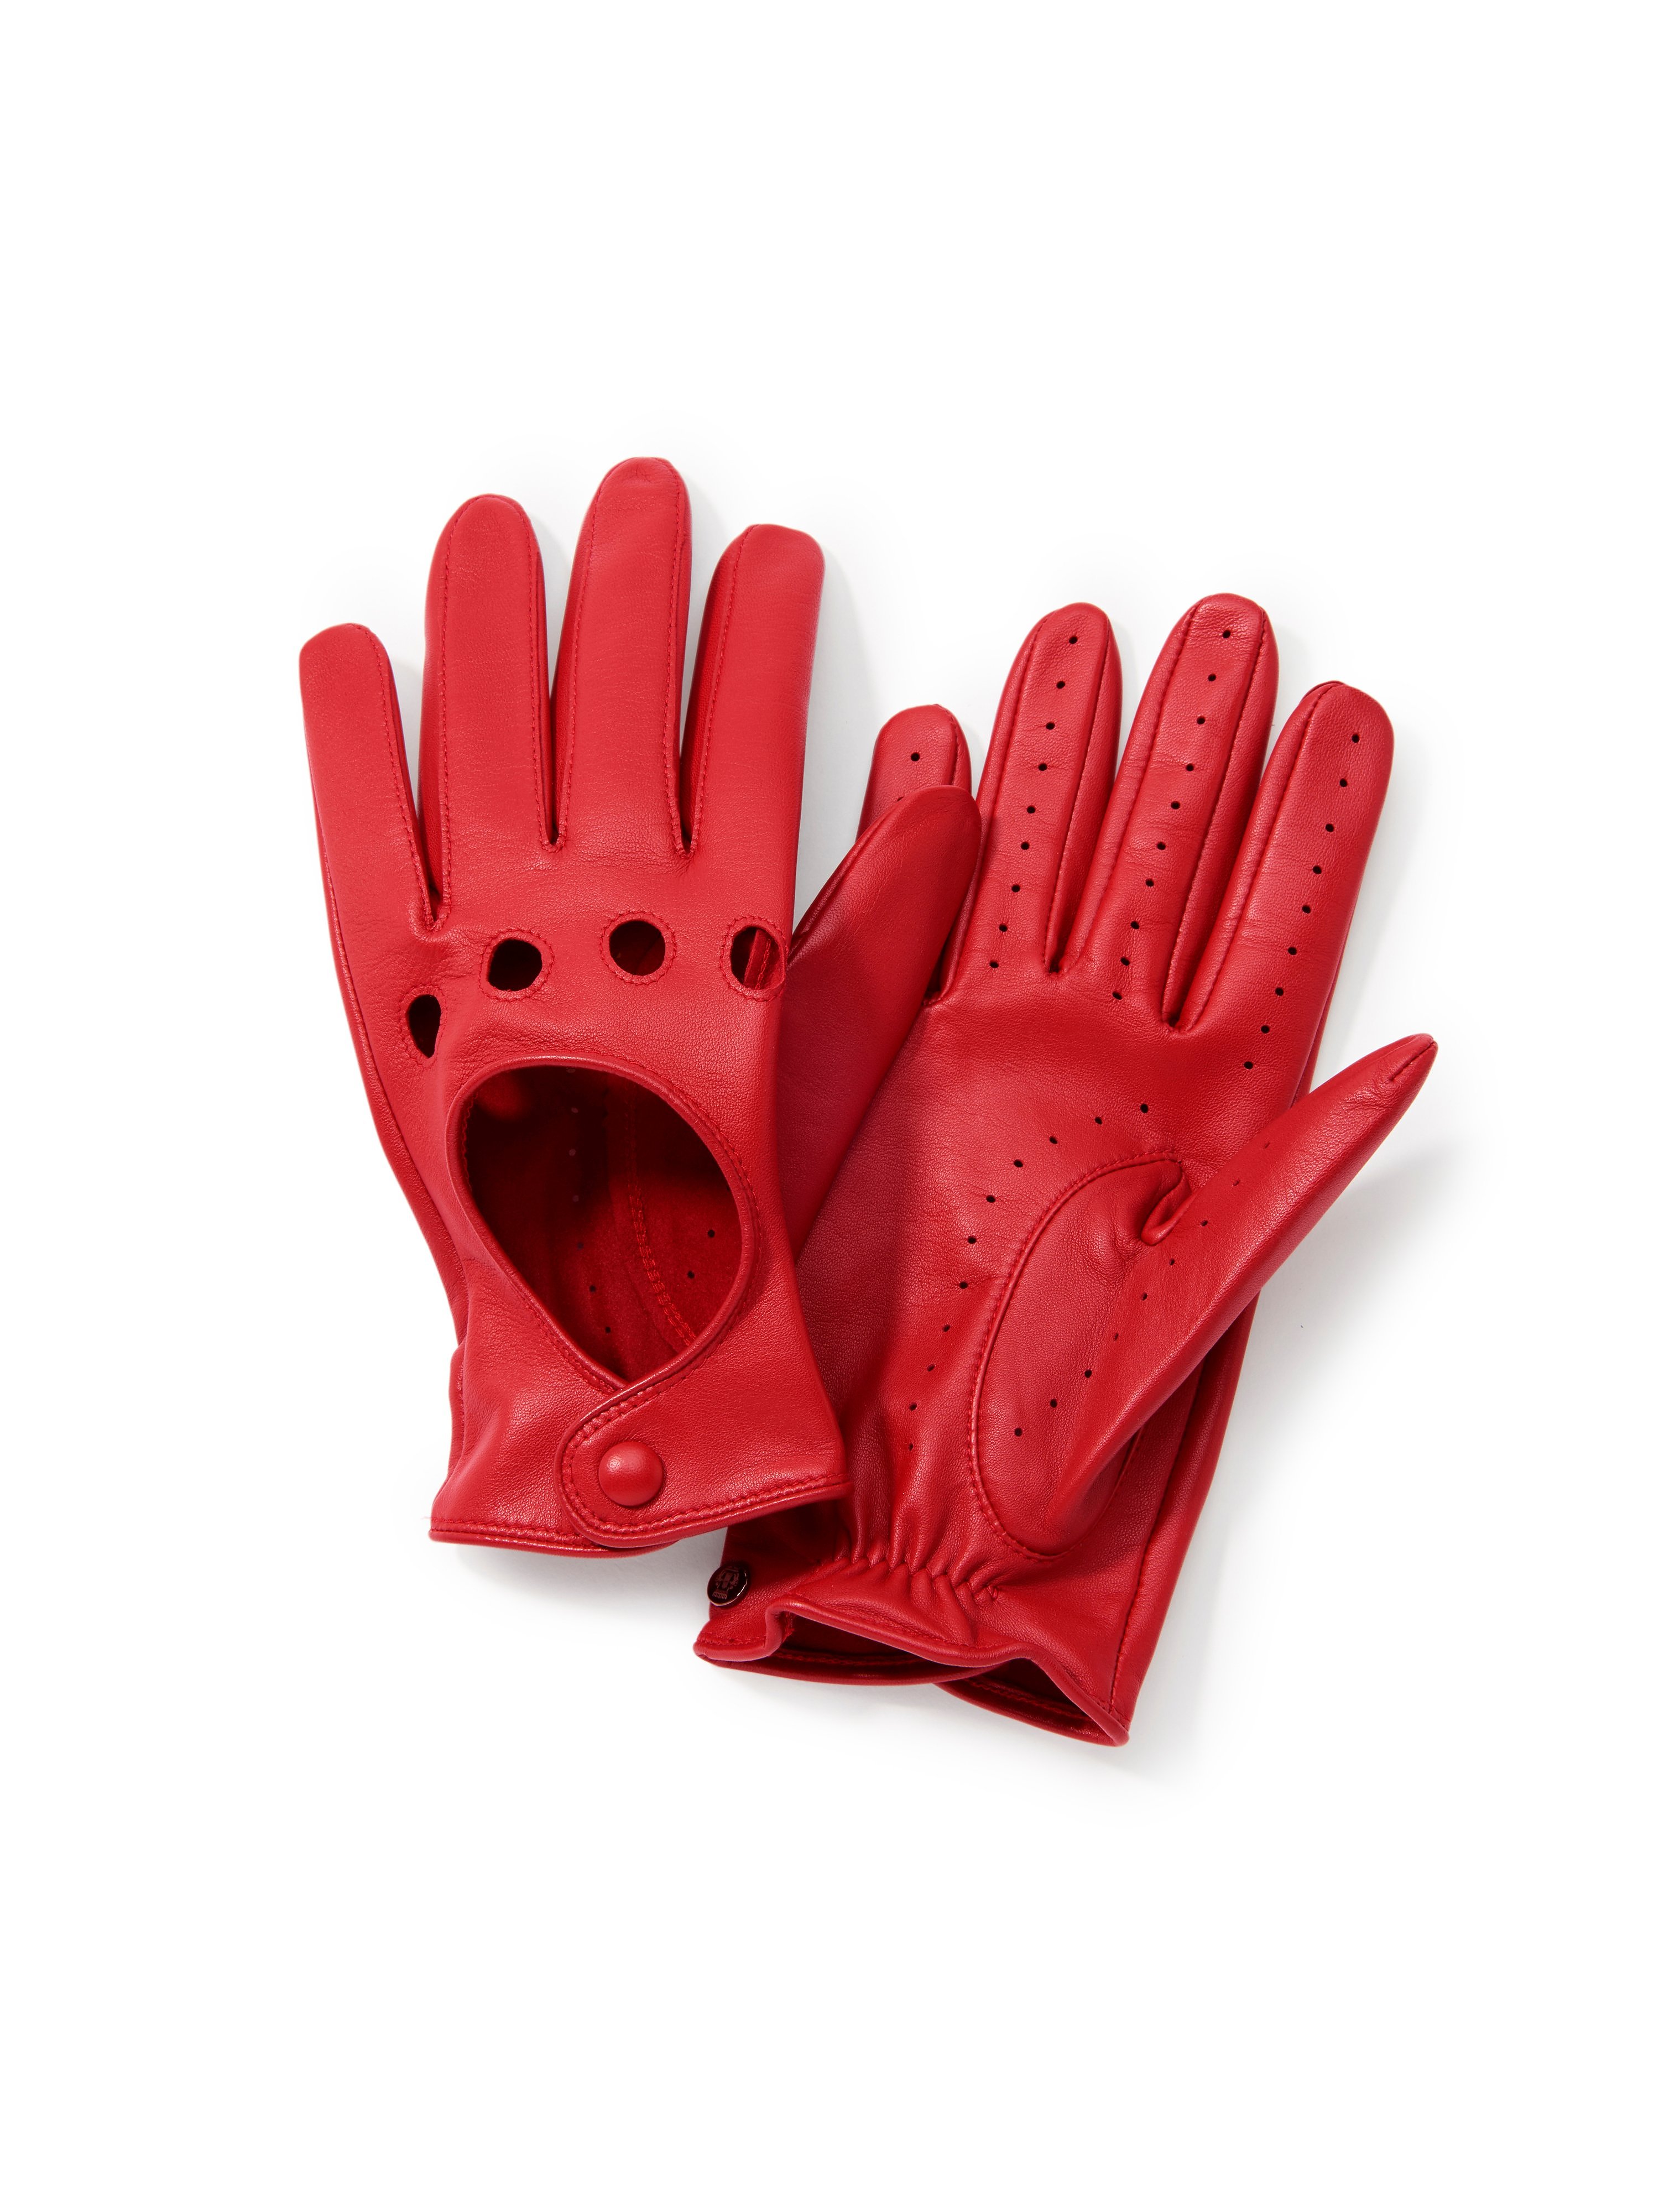 Les gants cuir nappa mouton  Roeckl rouge taille 8